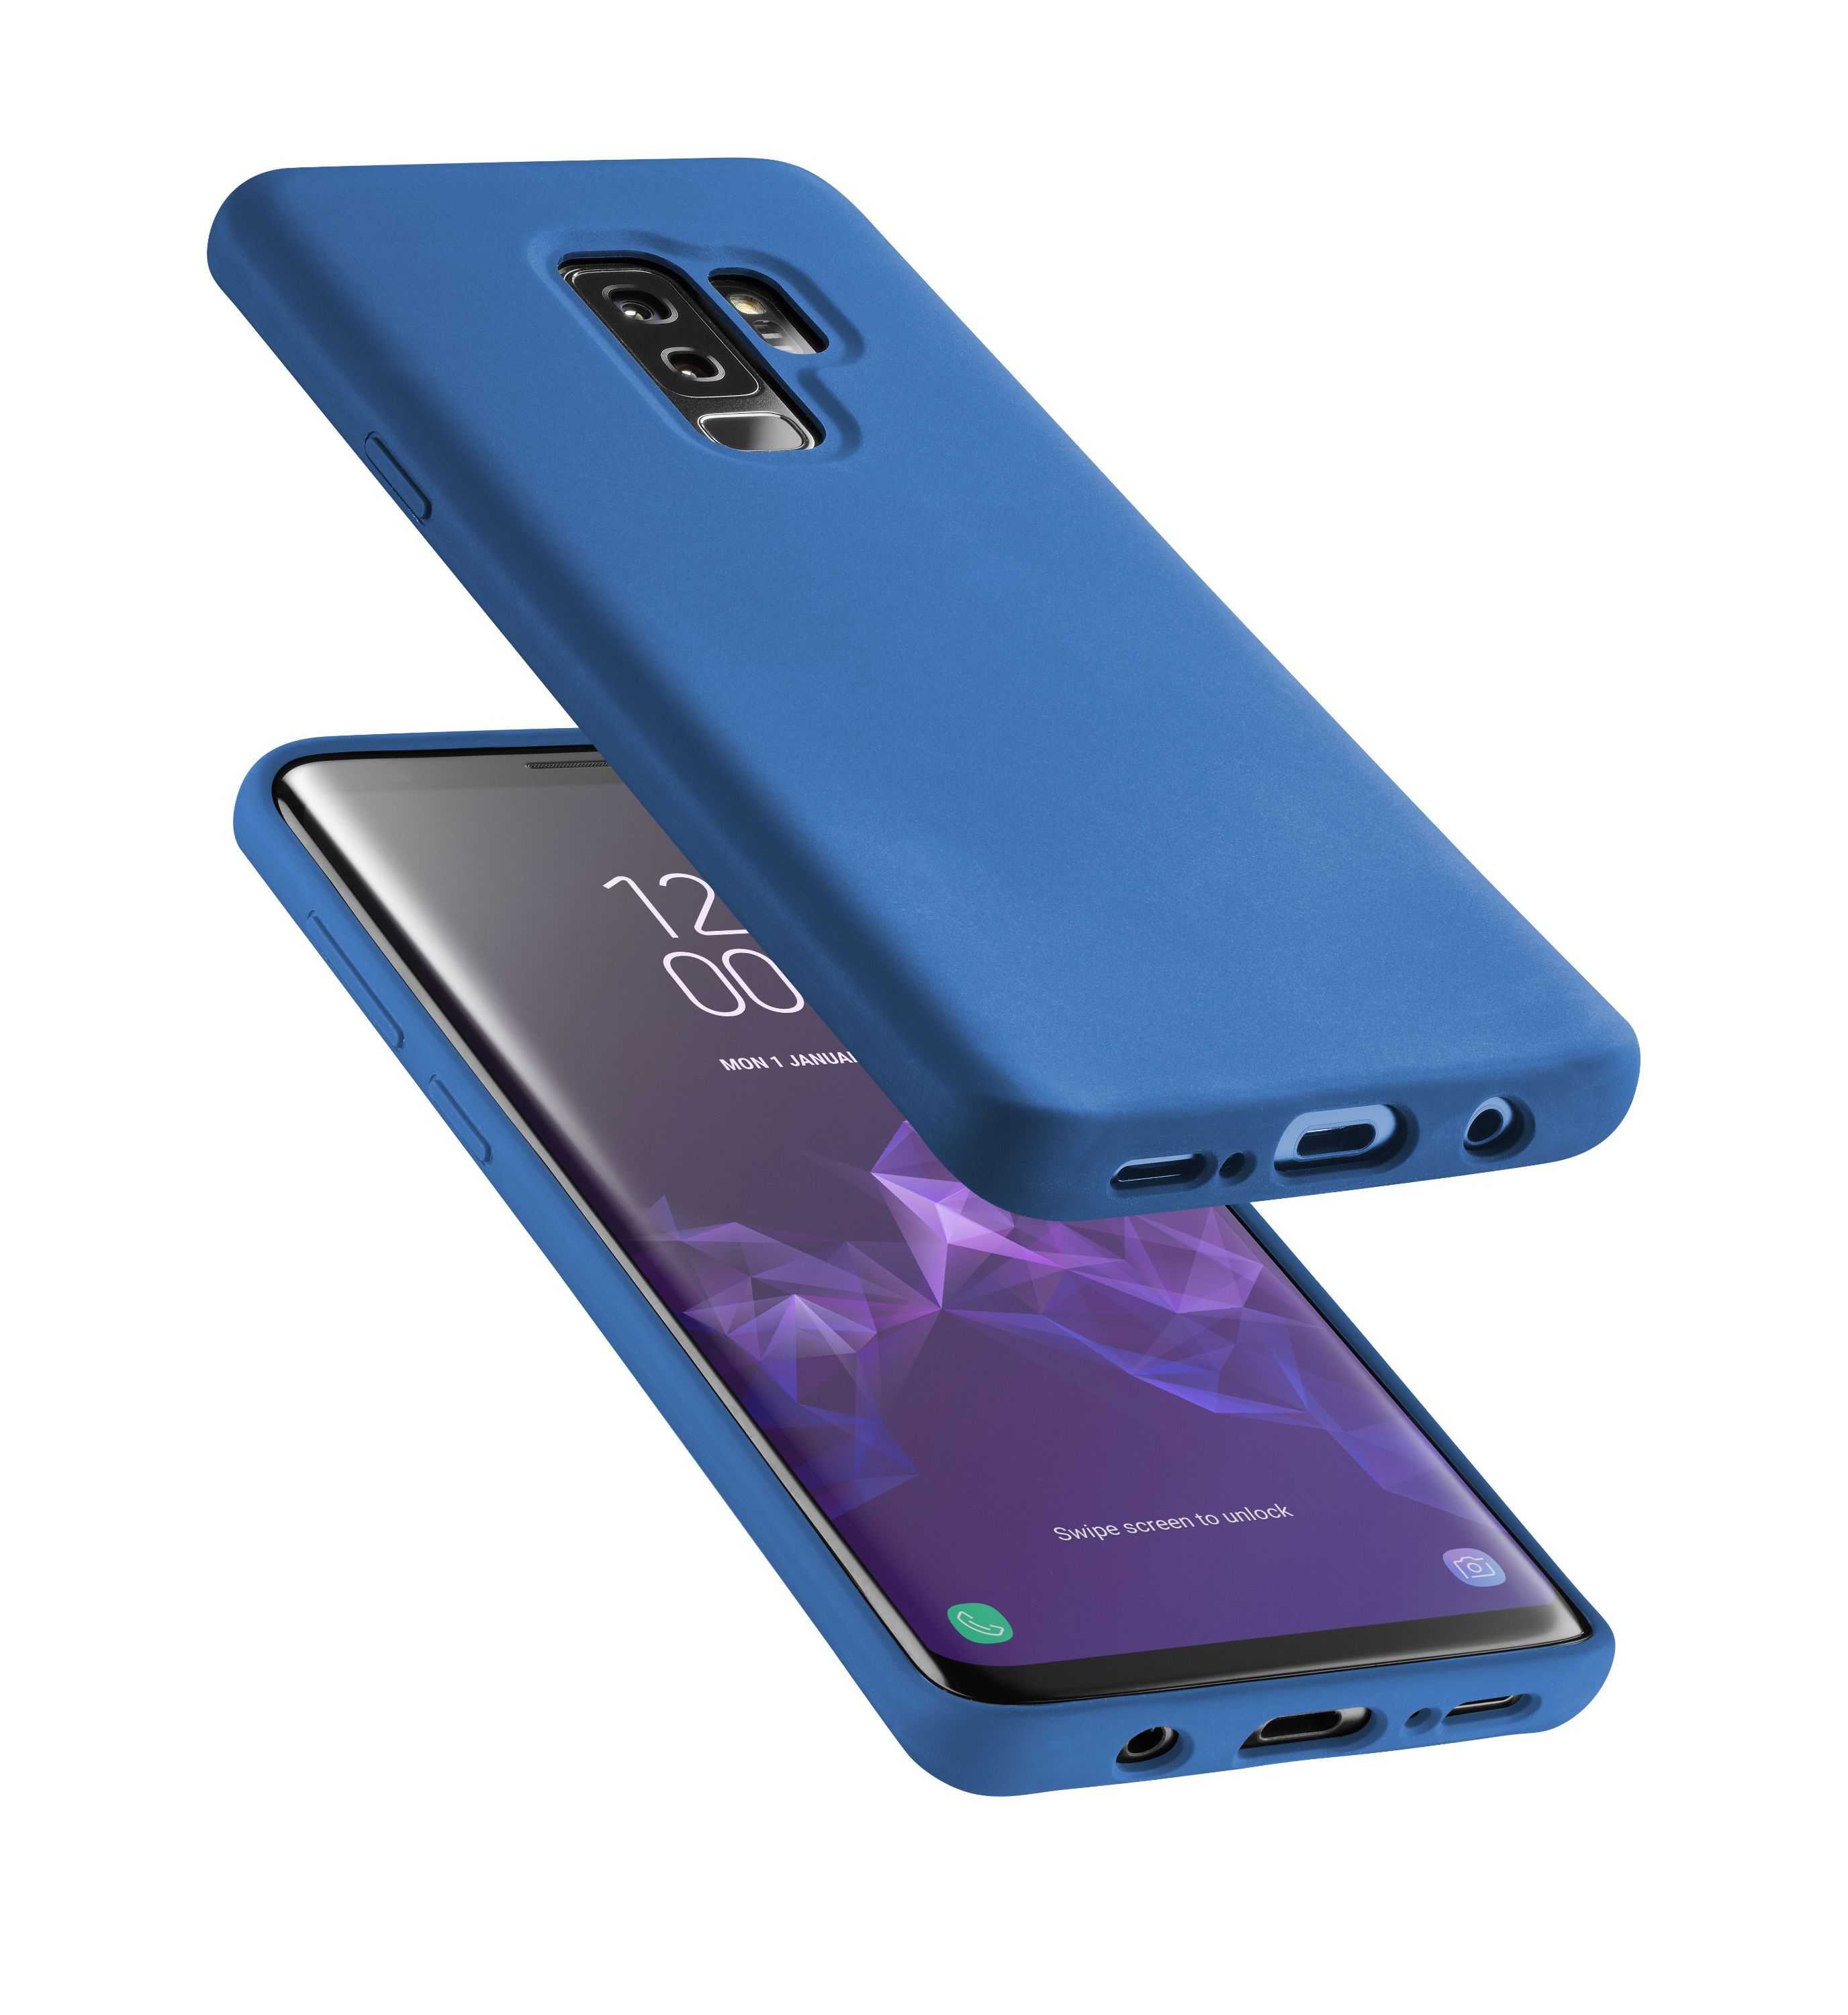 Silikonové pouzdro CellularLine Sensation pro Samsung Galaxy S9 Plus modrý